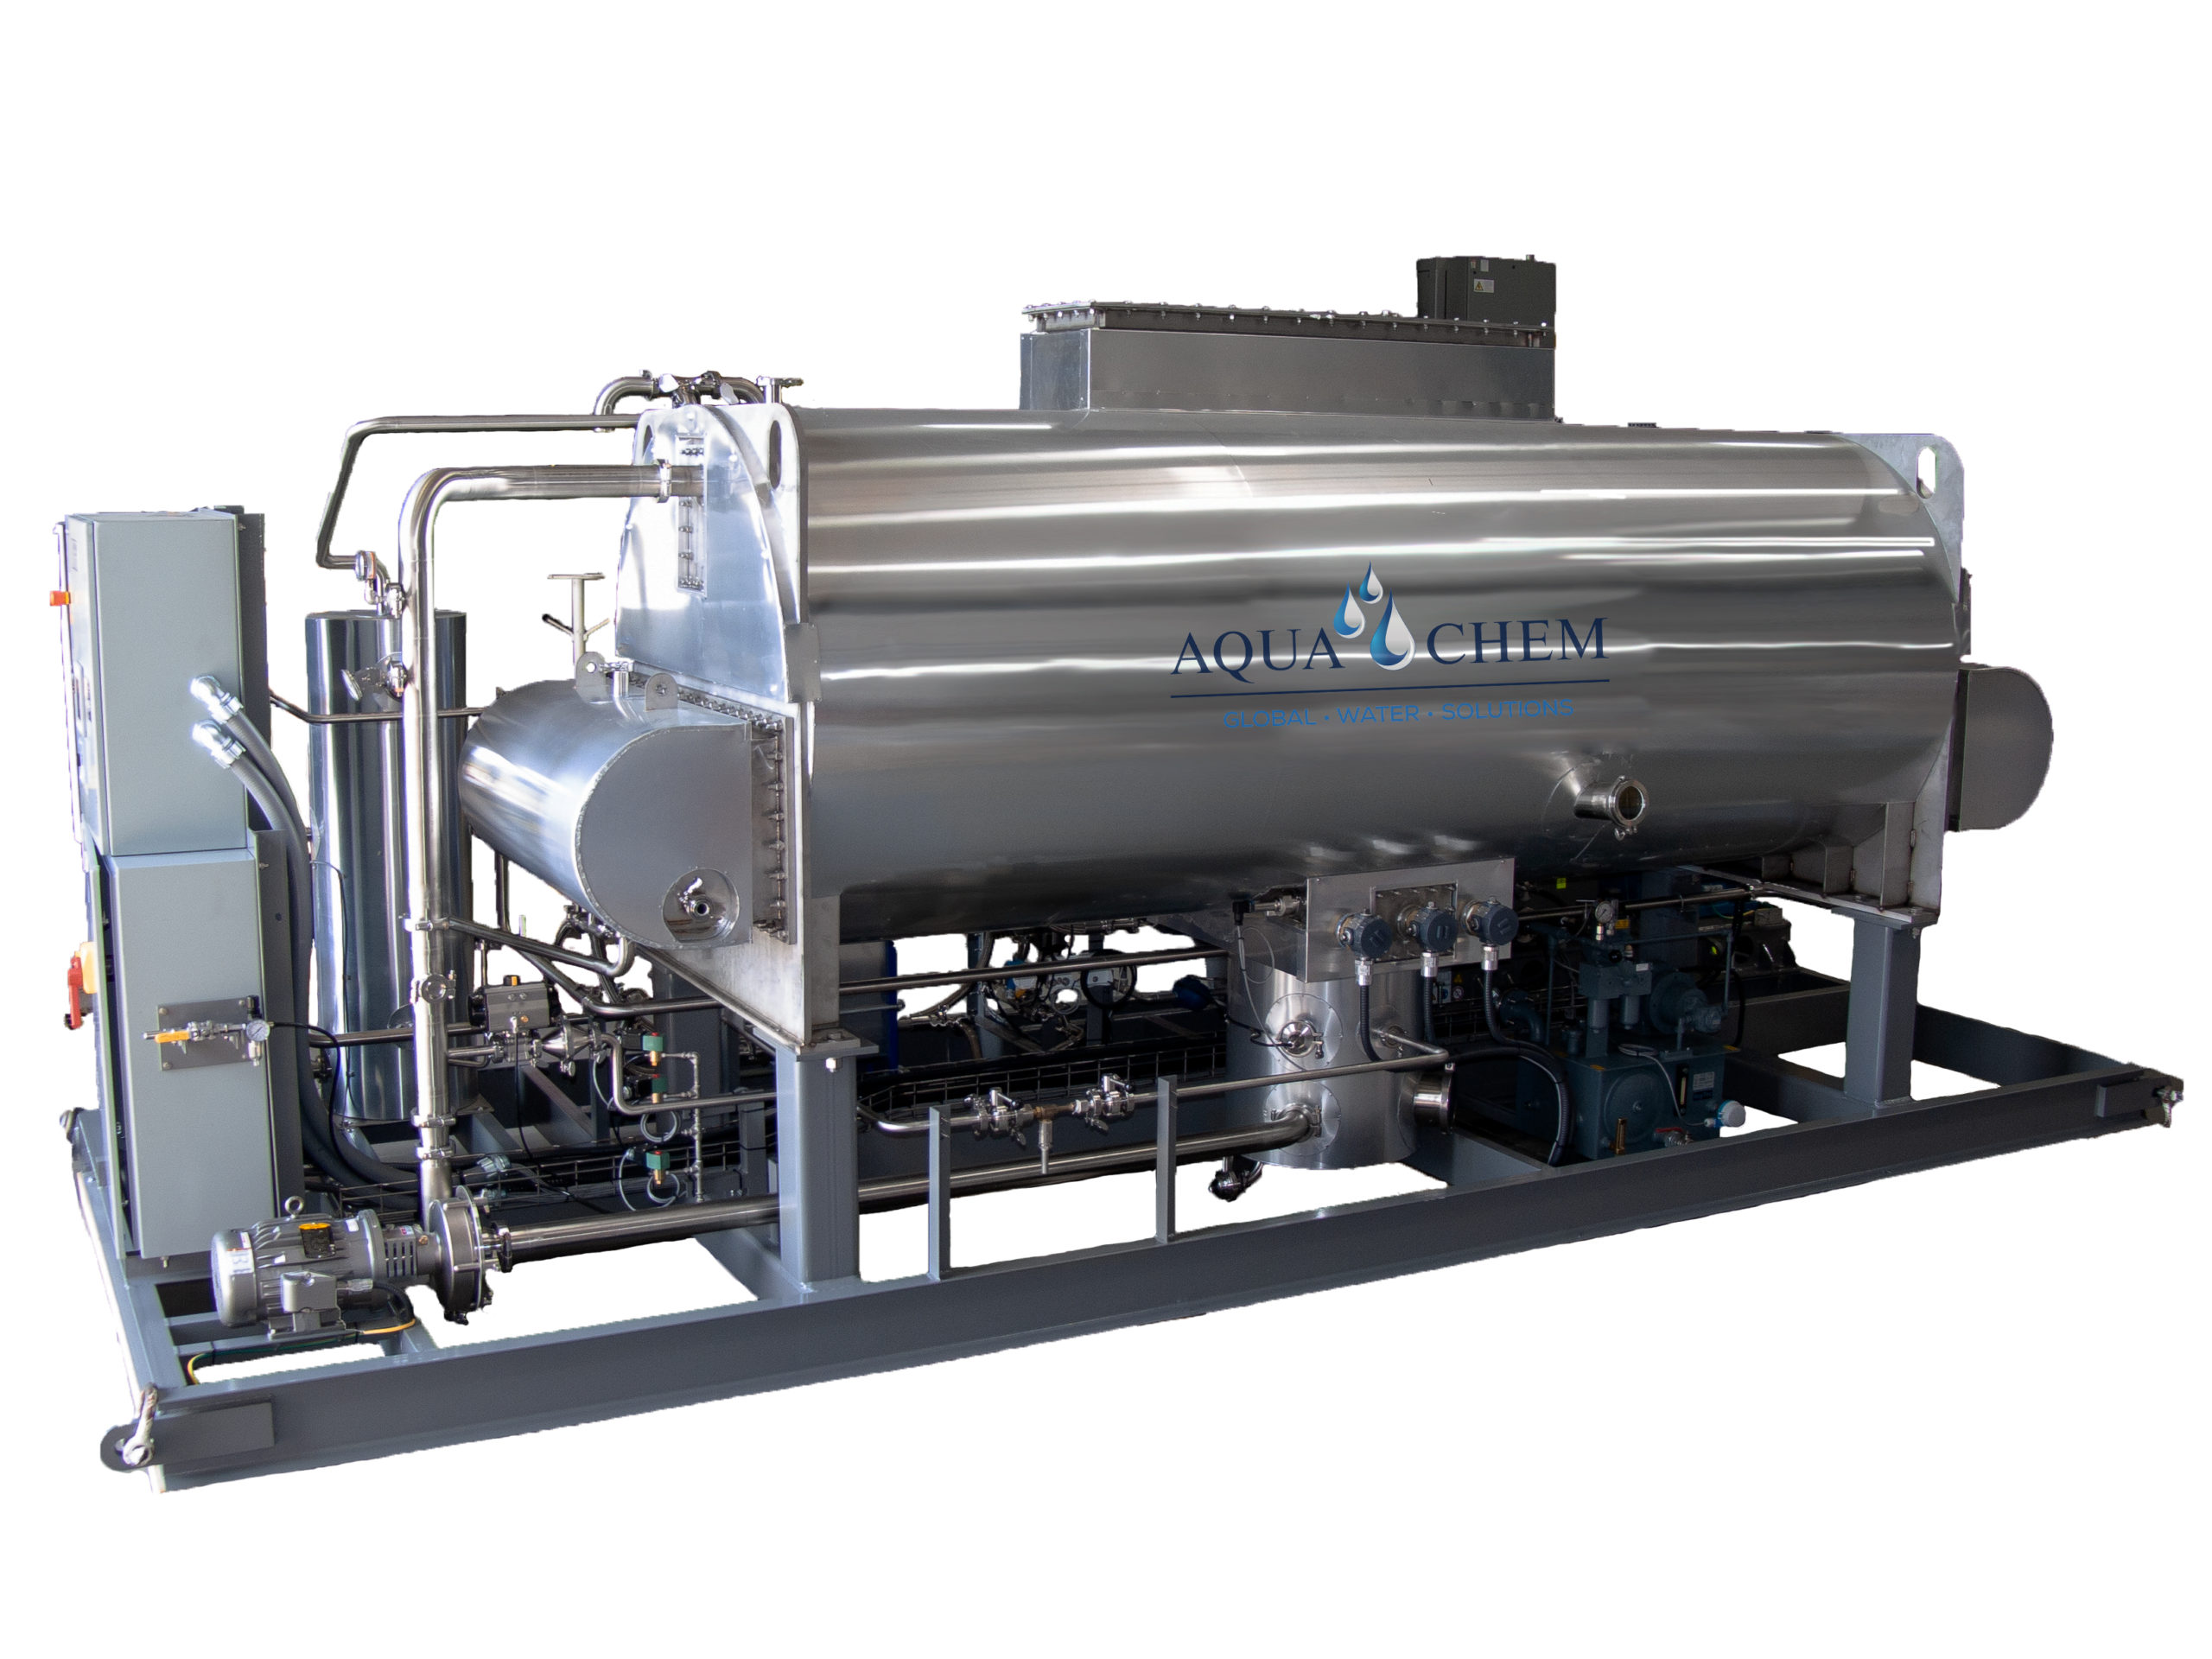 Aqua-Chem Beverage Vapor Compression Distiller